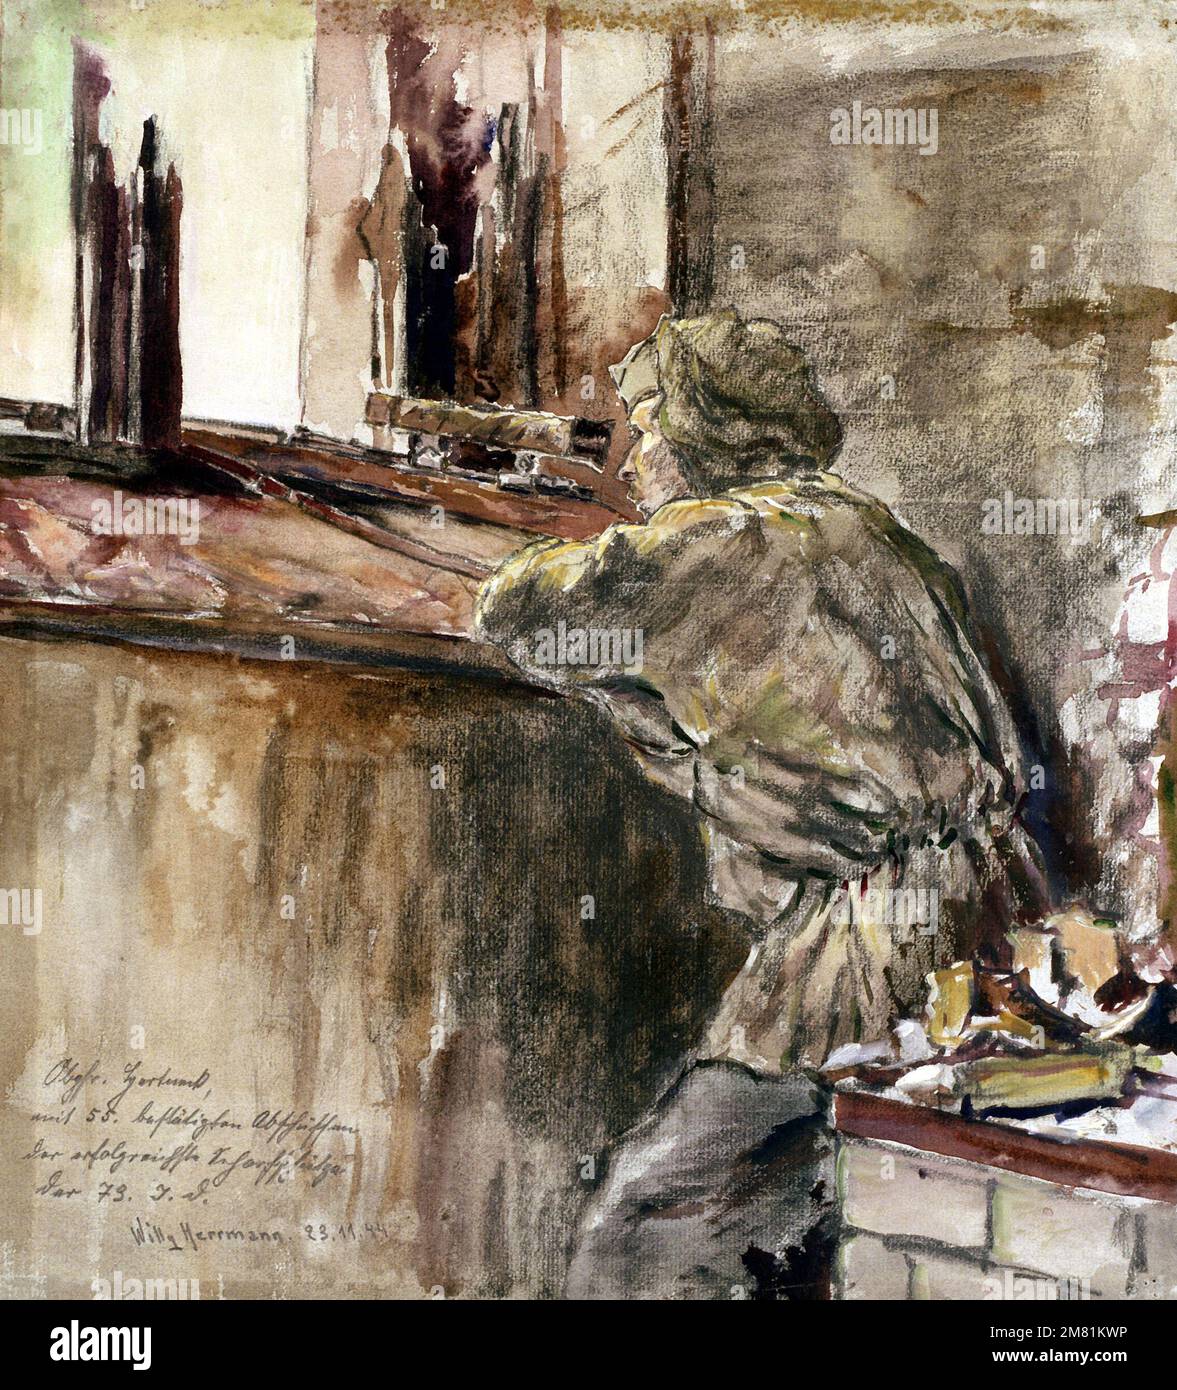 Bildmaterial: "Portrait of German Sniper Sharpshooter PFC Hortenek, 73D. Infanteriedivision", 1944. Künstler: Willy Herman. Katalognummer: G.W.1.3021.47. US Army Art Kollektion. Land: Unbekannt Stockfoto